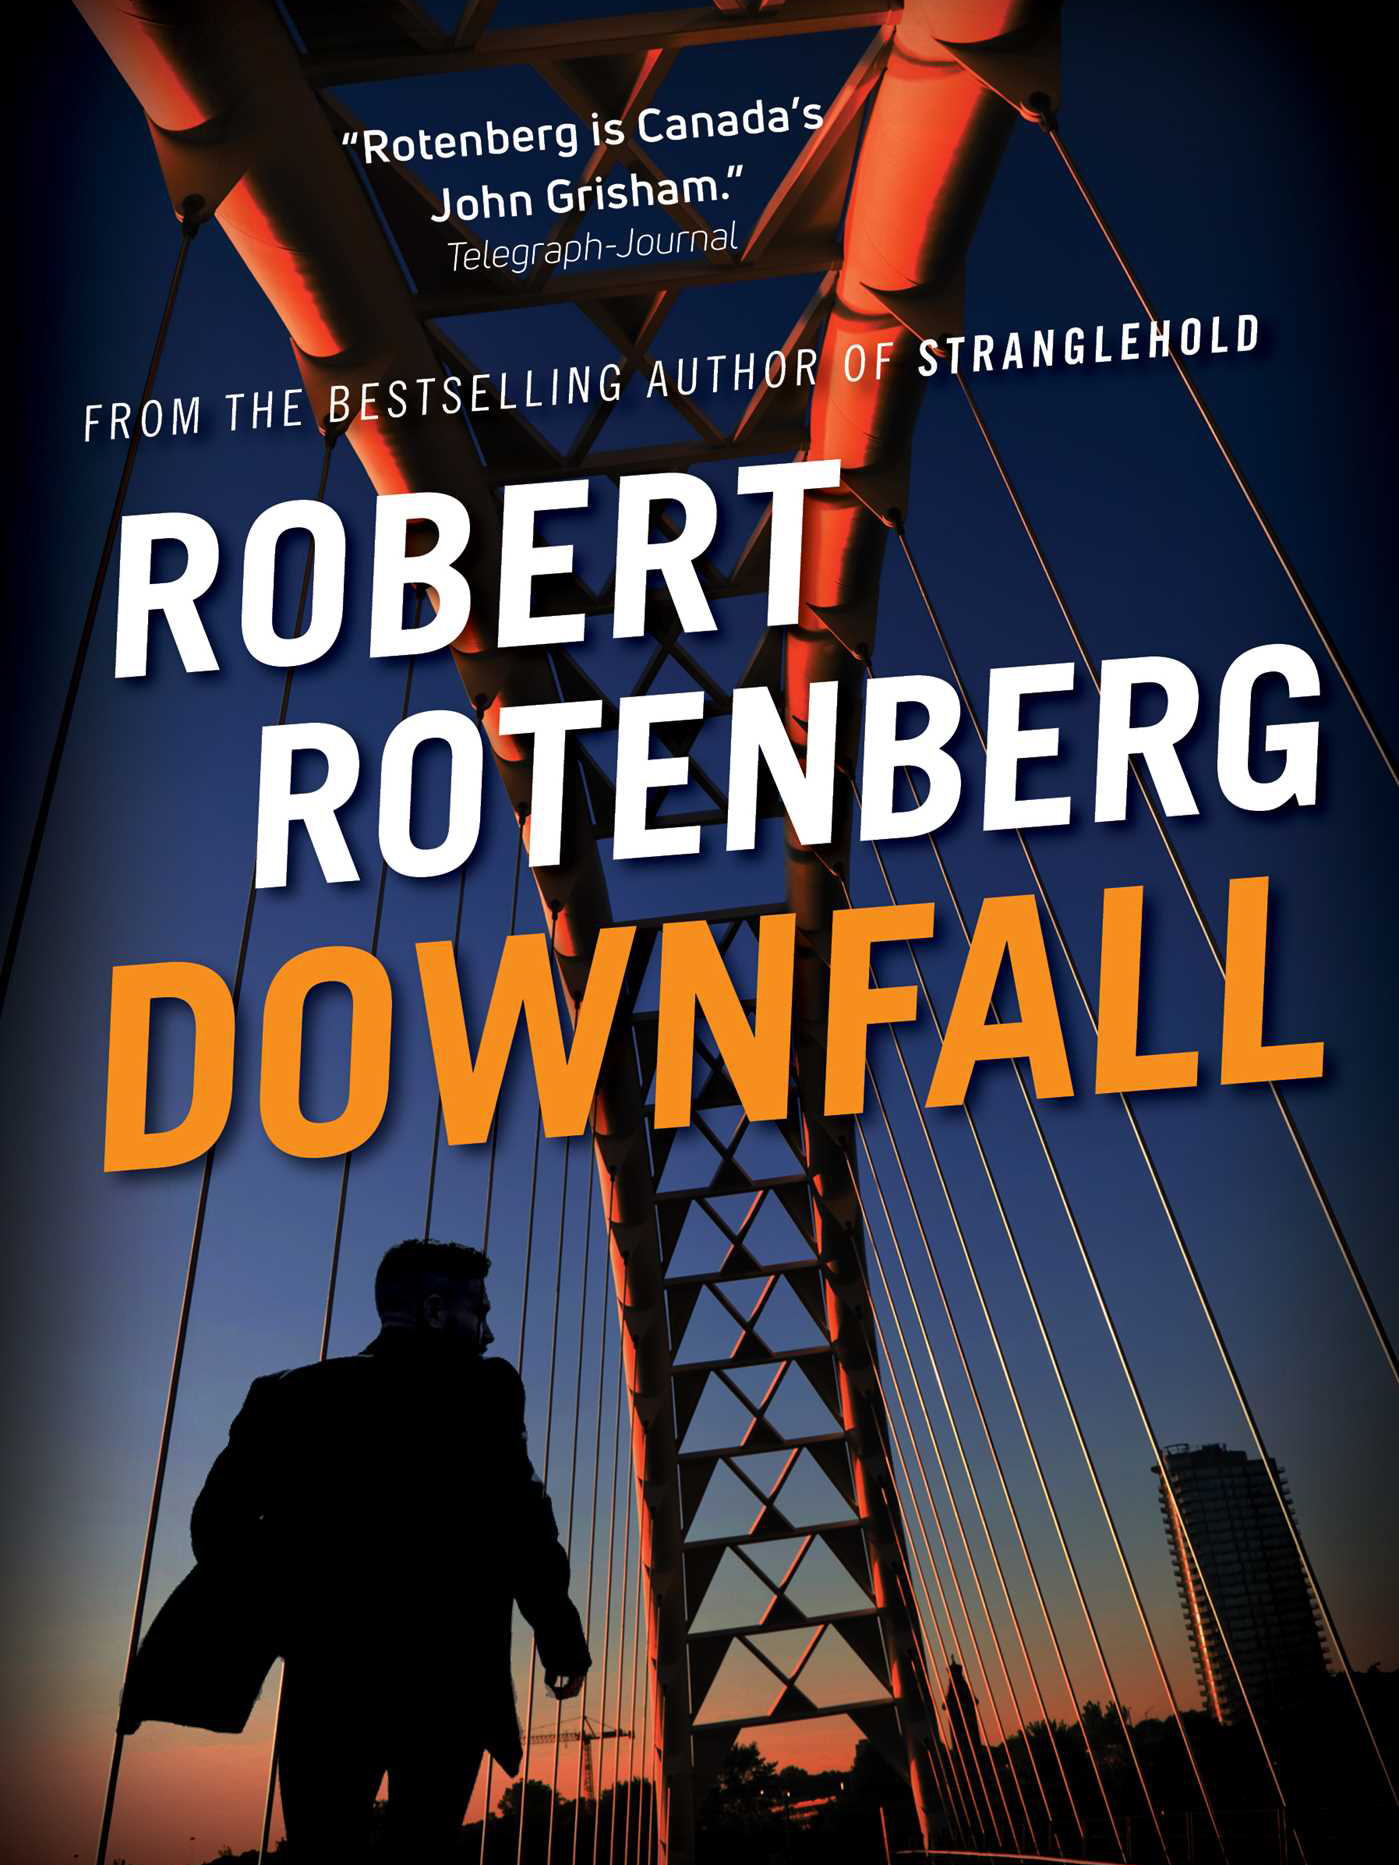 book cover of Robert Rotenberg novel Downfall